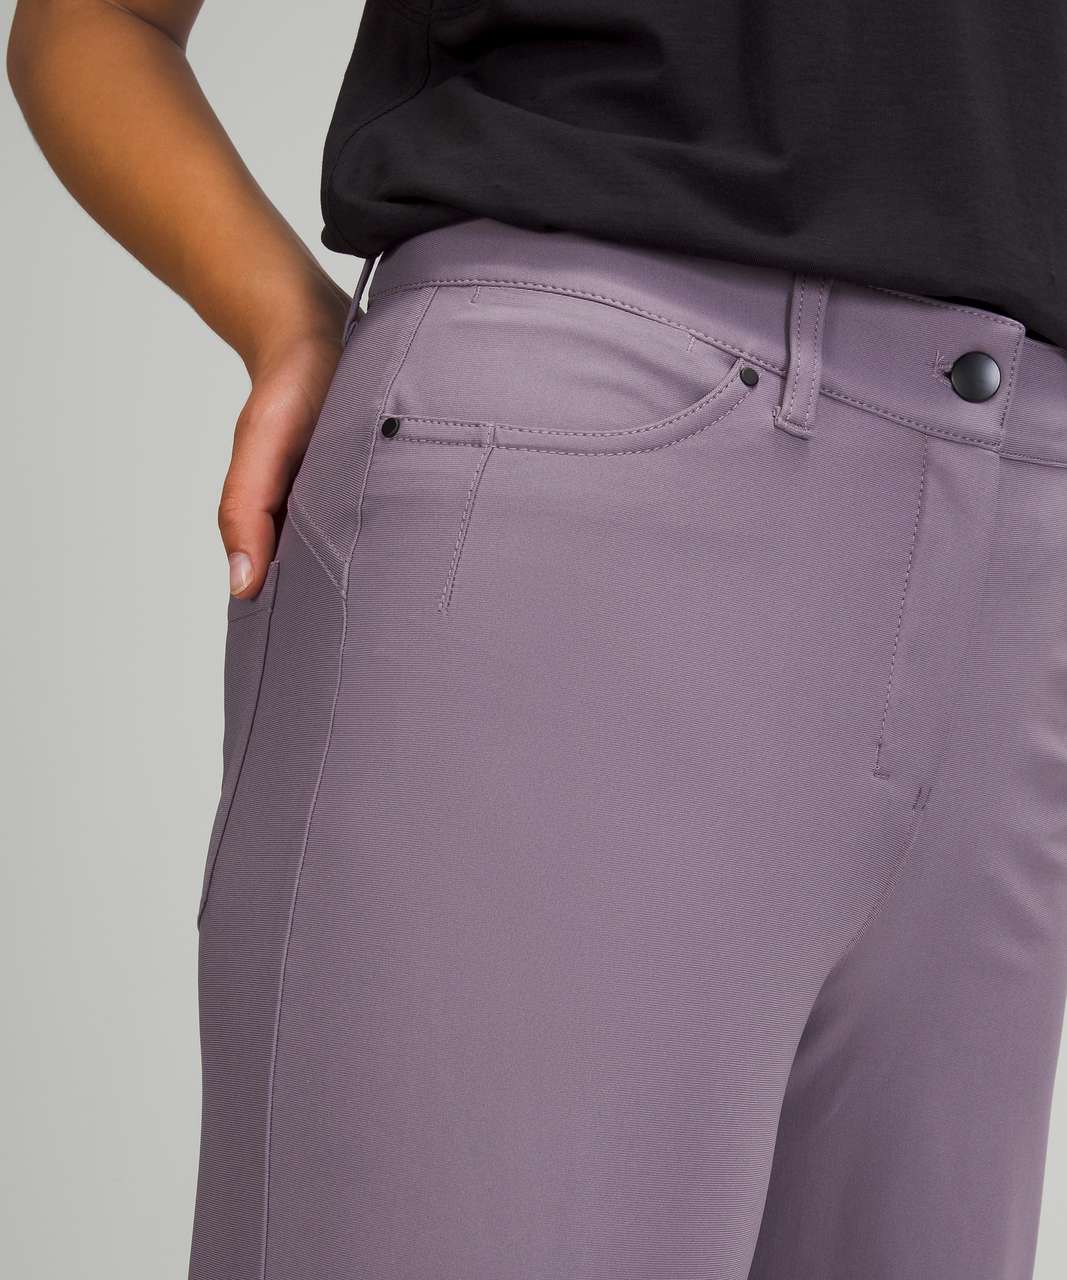 Lululemon City Sleek 5 Pocket Wide-Leg High Rise 7/8 Length Pant - Dusky Lavender